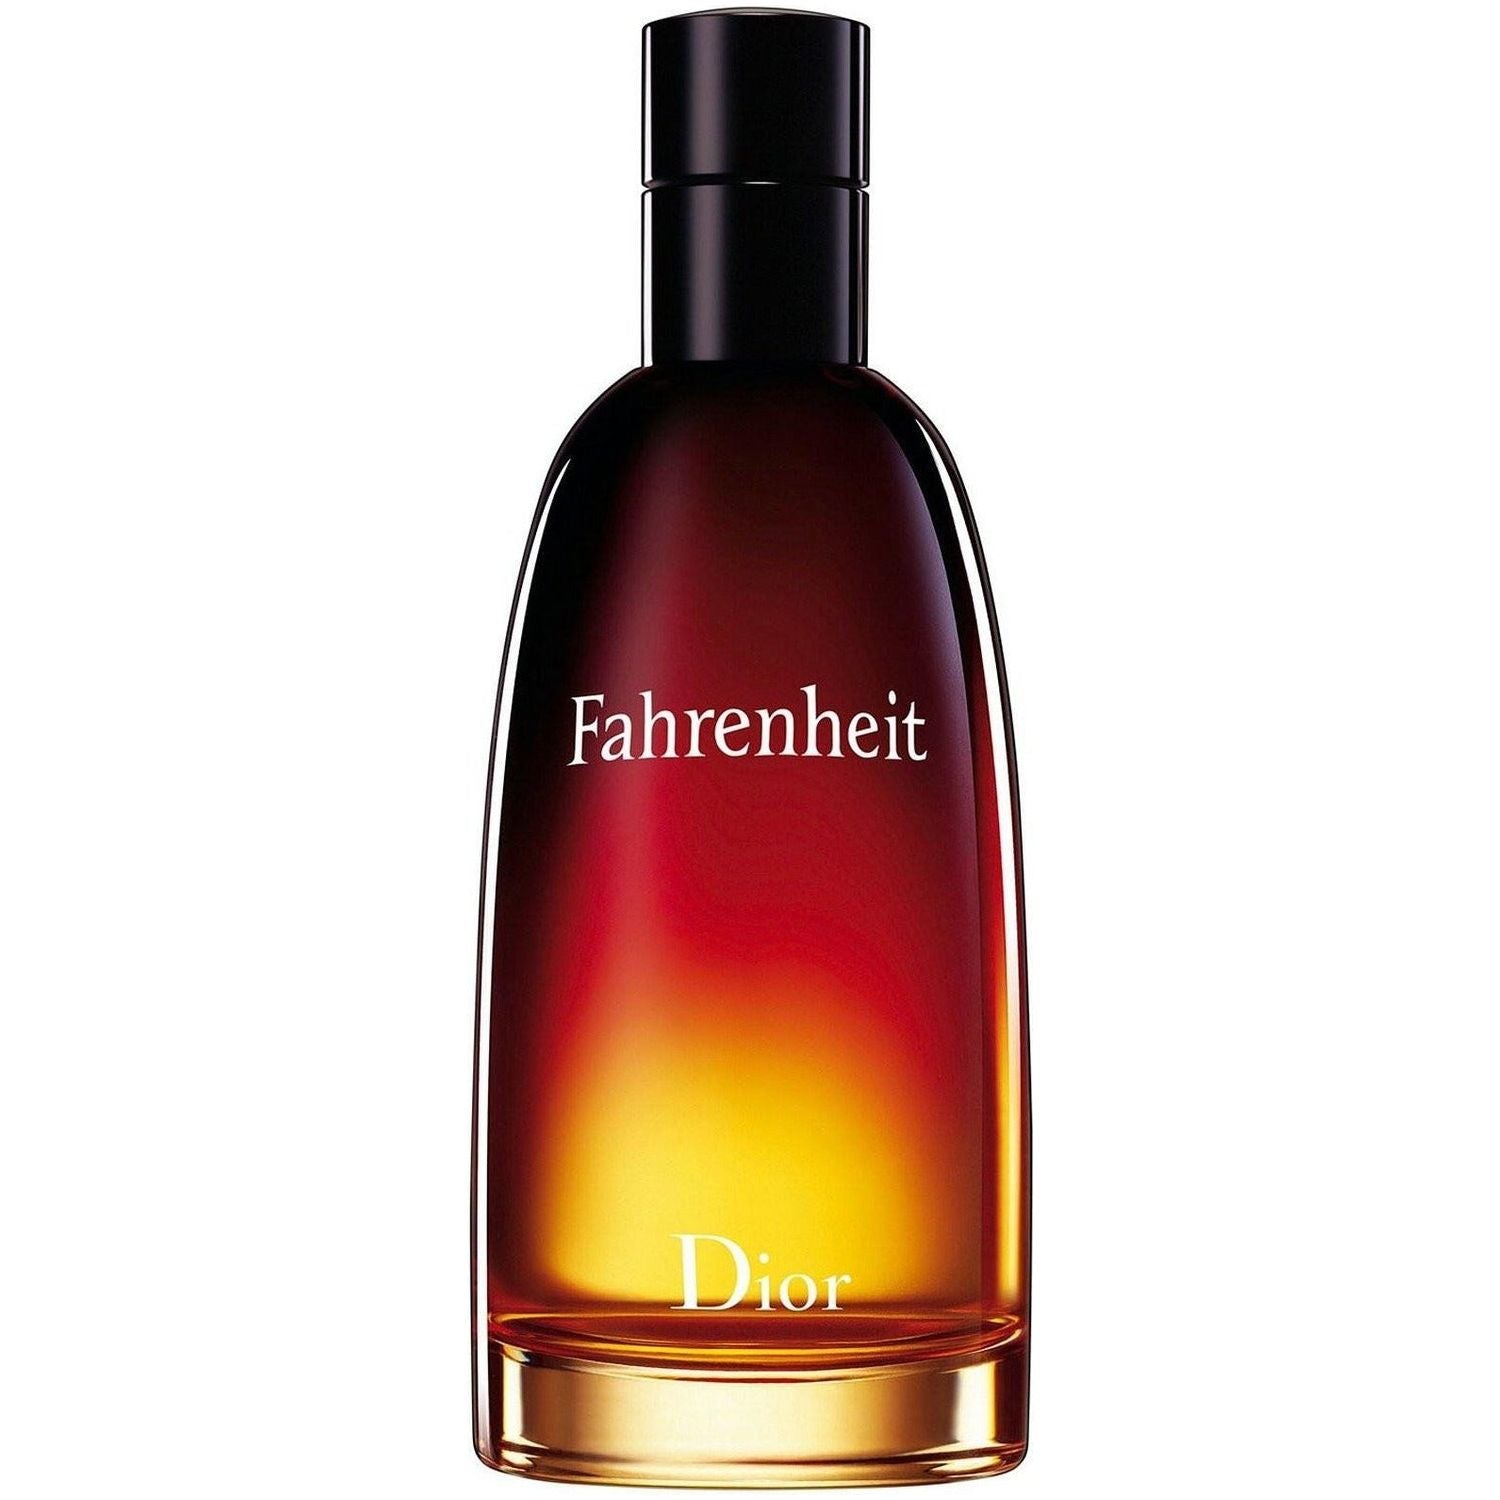 Fahrenheit Christian Dior Cologne 3.4 